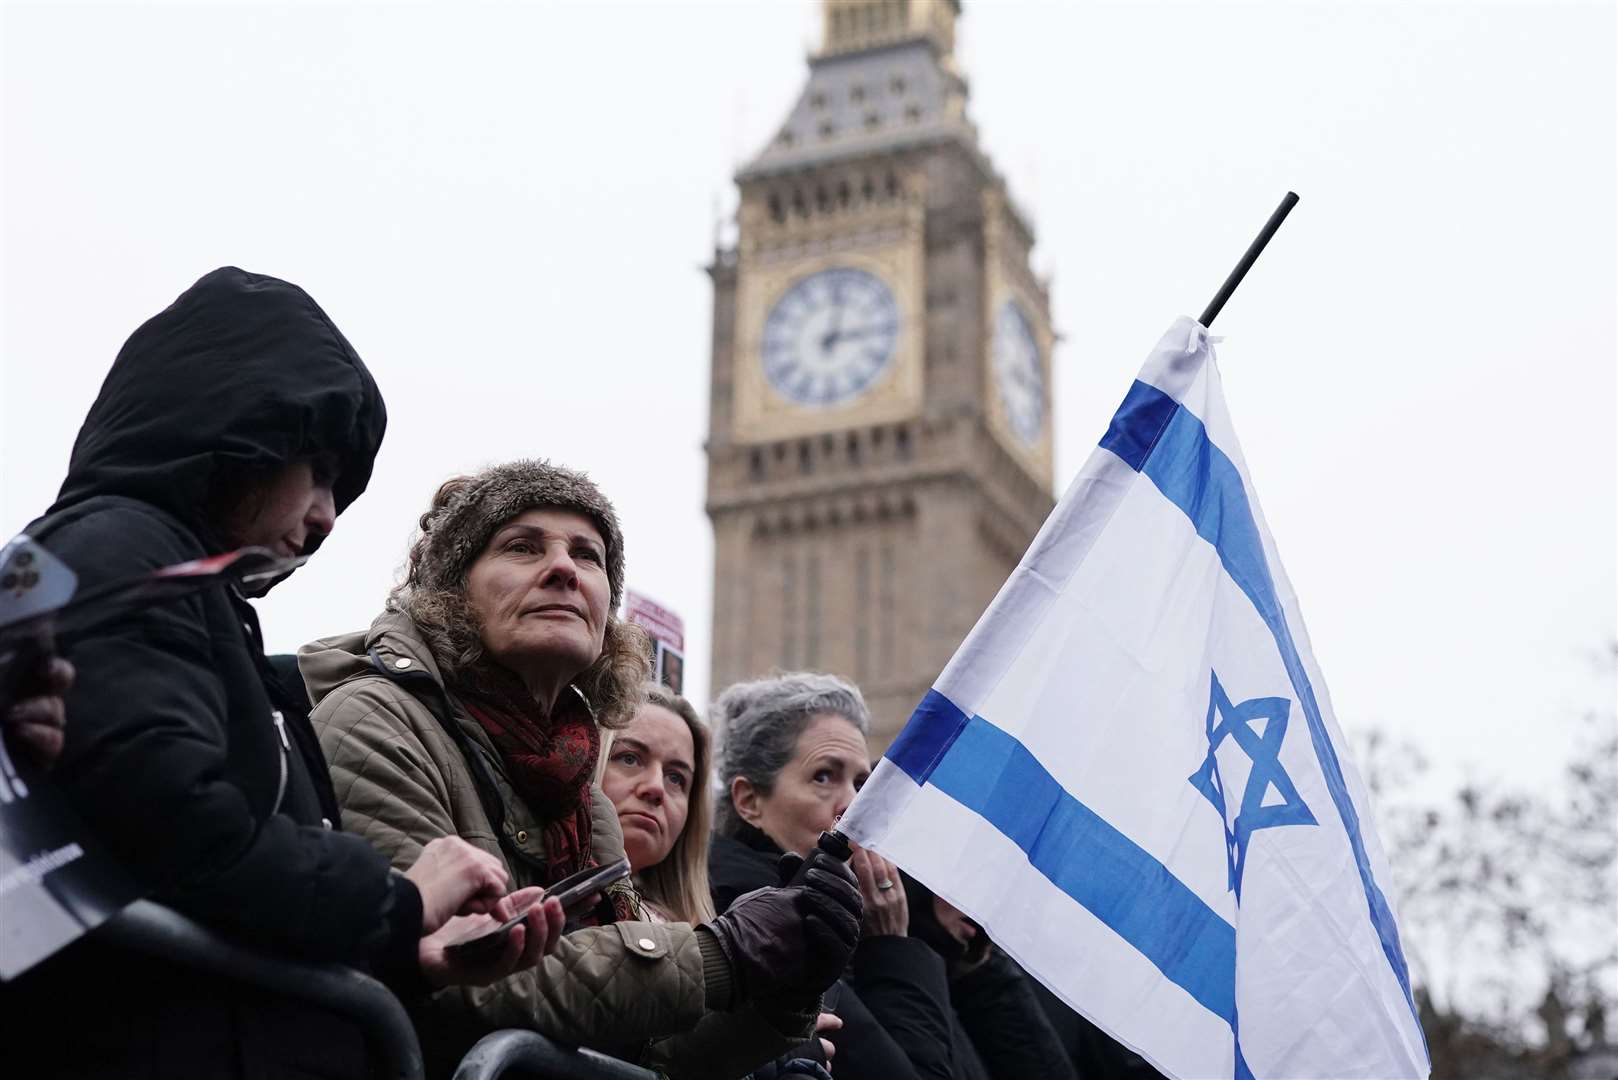 People at the rally waved Israeli and Union flags (Jordan Pettitt/PA)